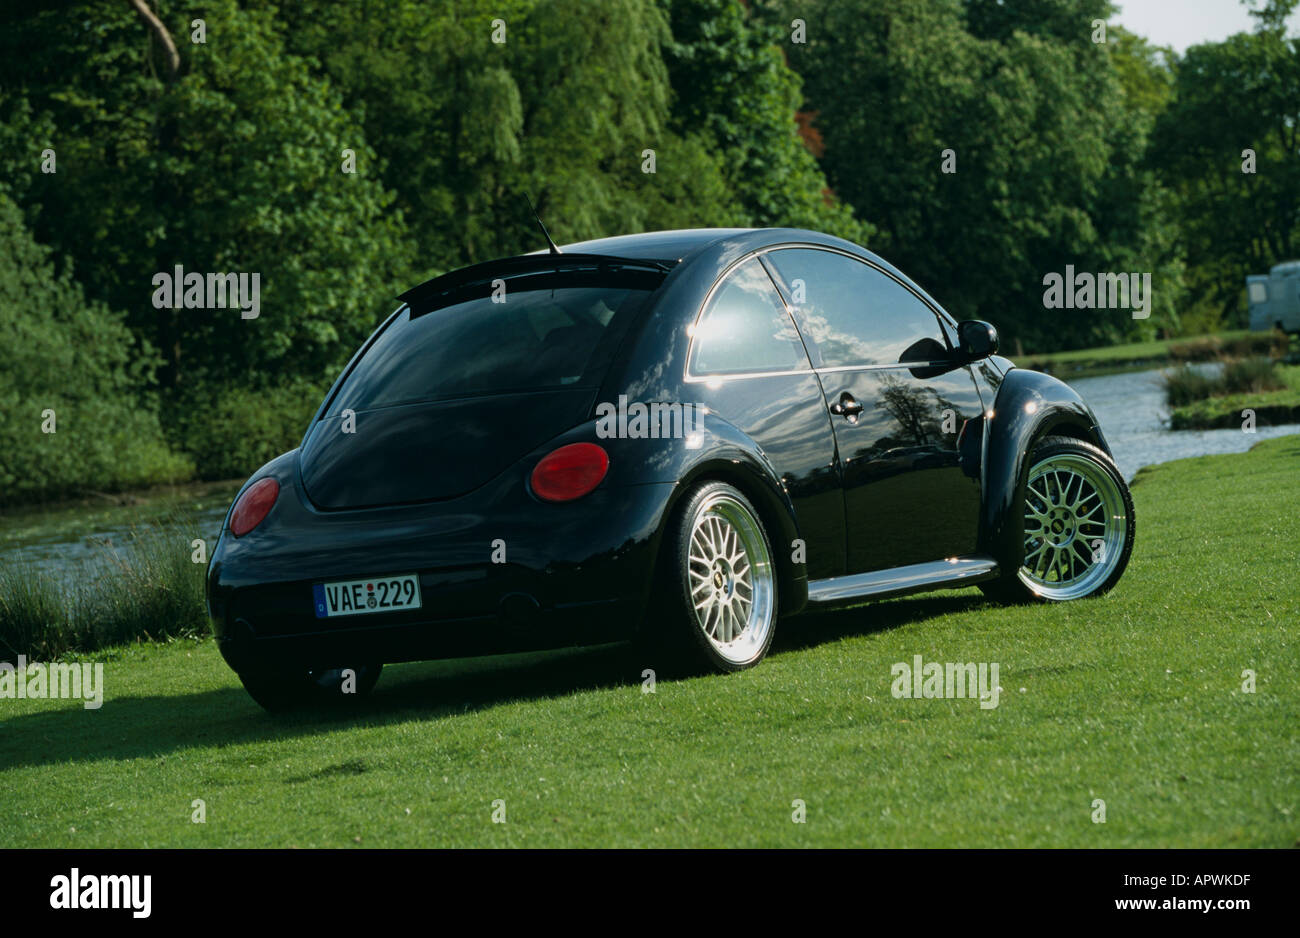 New Volkswagen Beetle Introduced 1999 Stock Photo